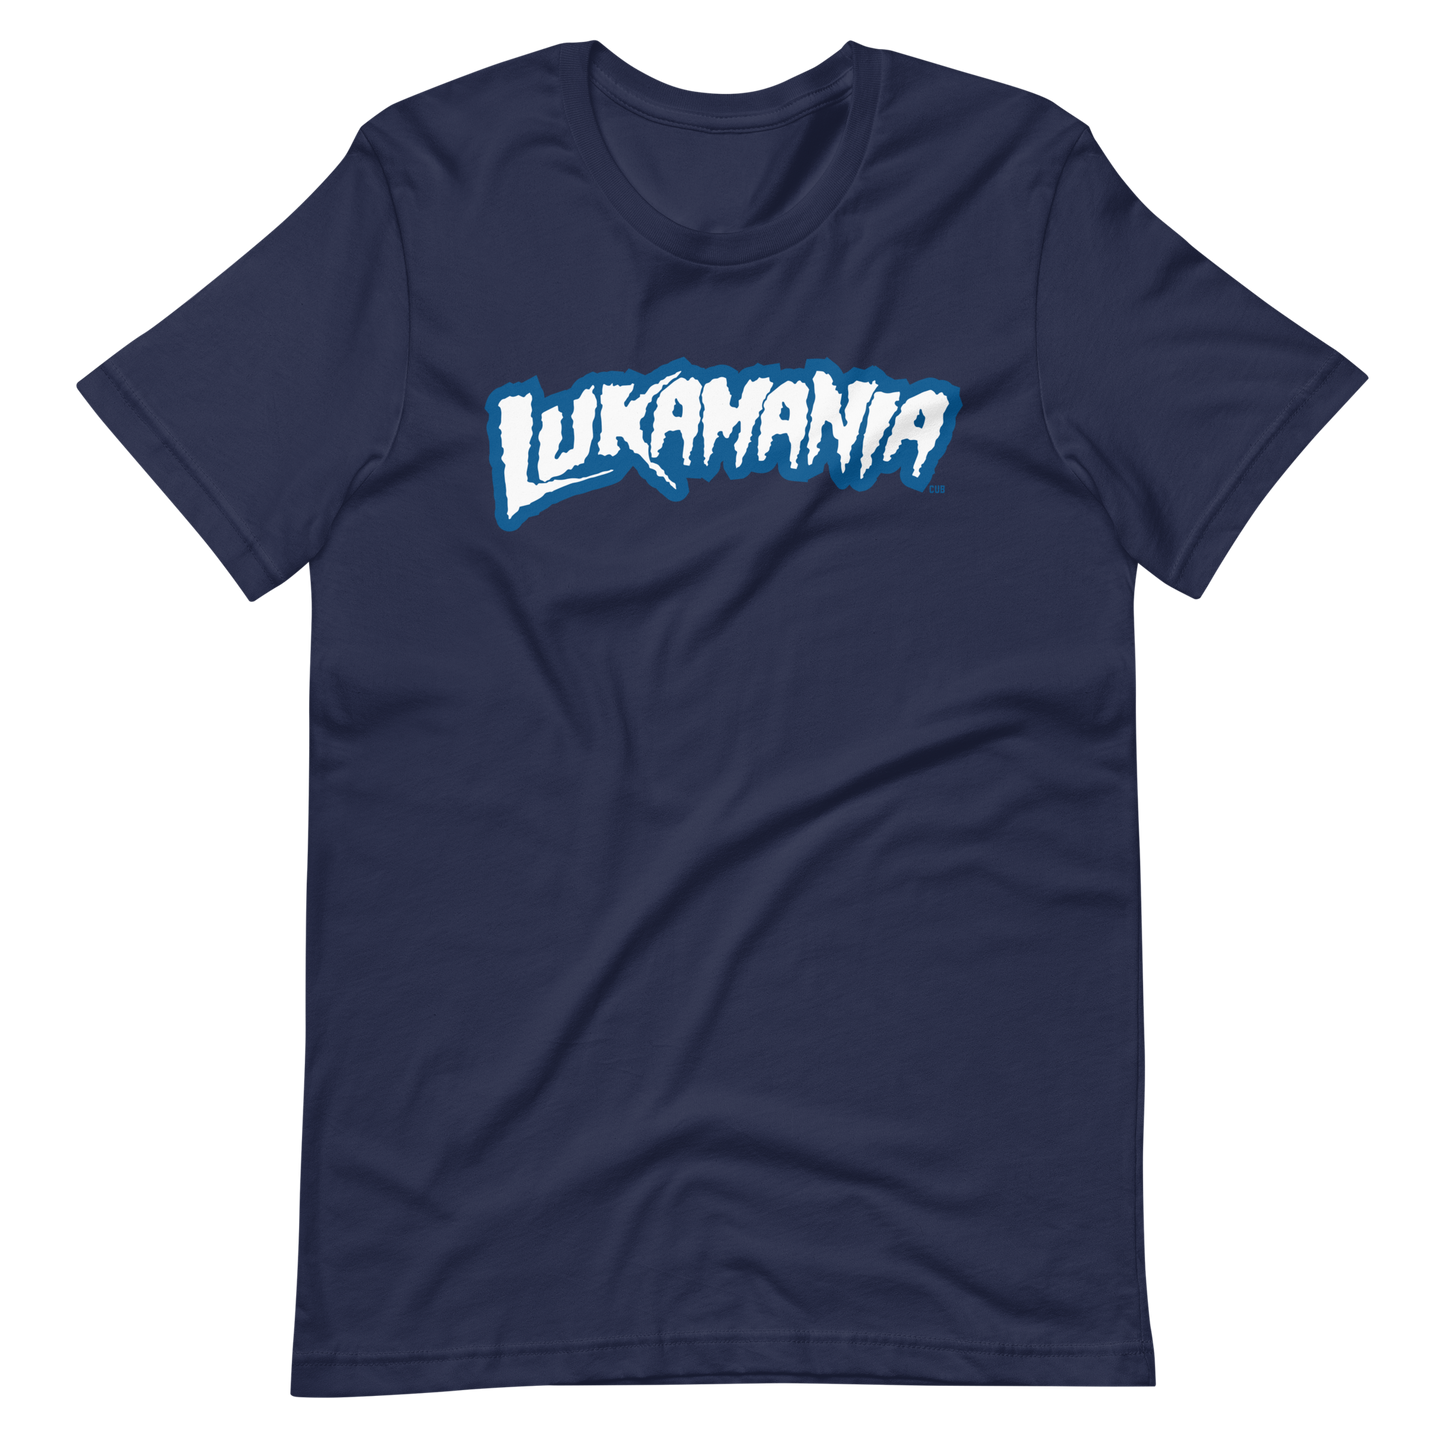 Lukamania T-Shirt